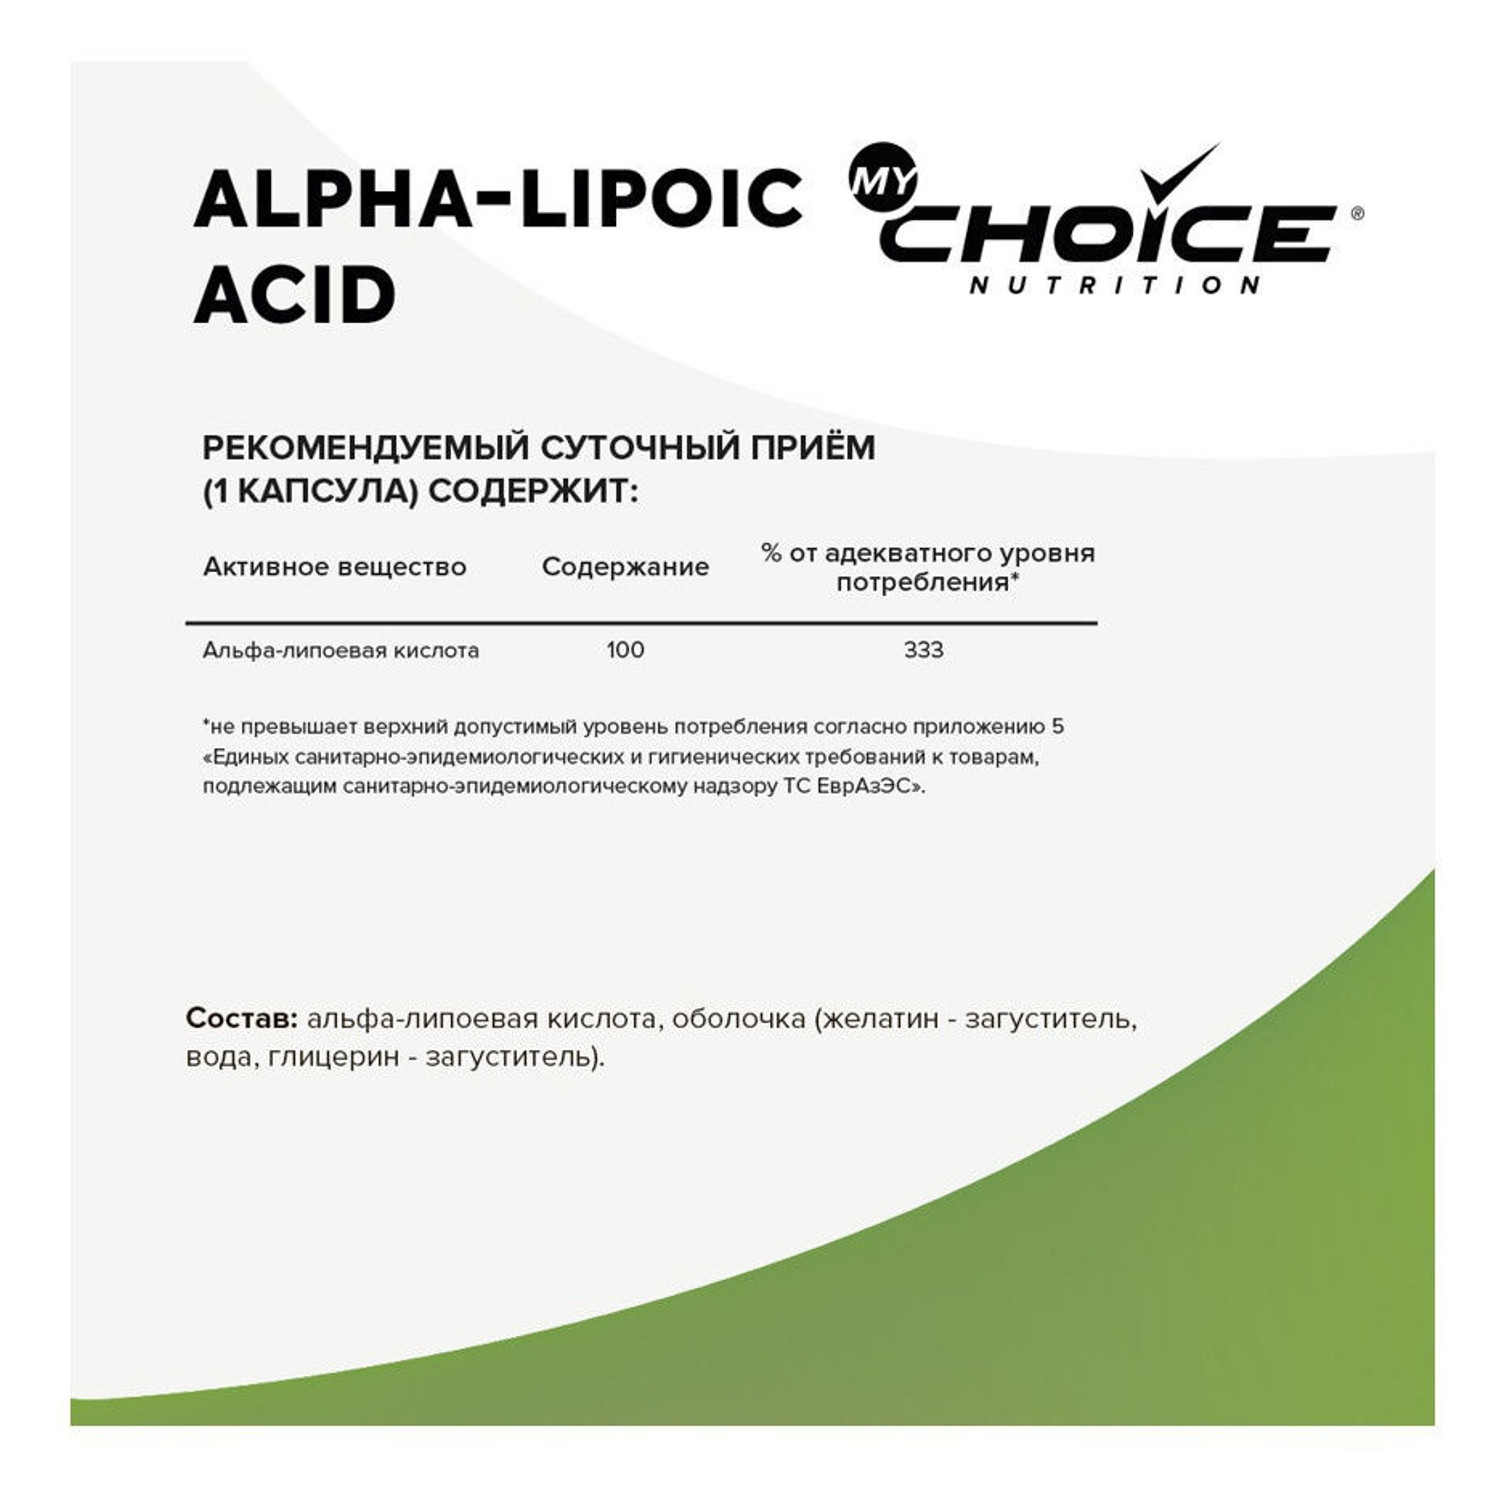 Комплексная пищевая добавка MyChoice Nutrition Alpha-lipoic Acid 60капсул - фото 2